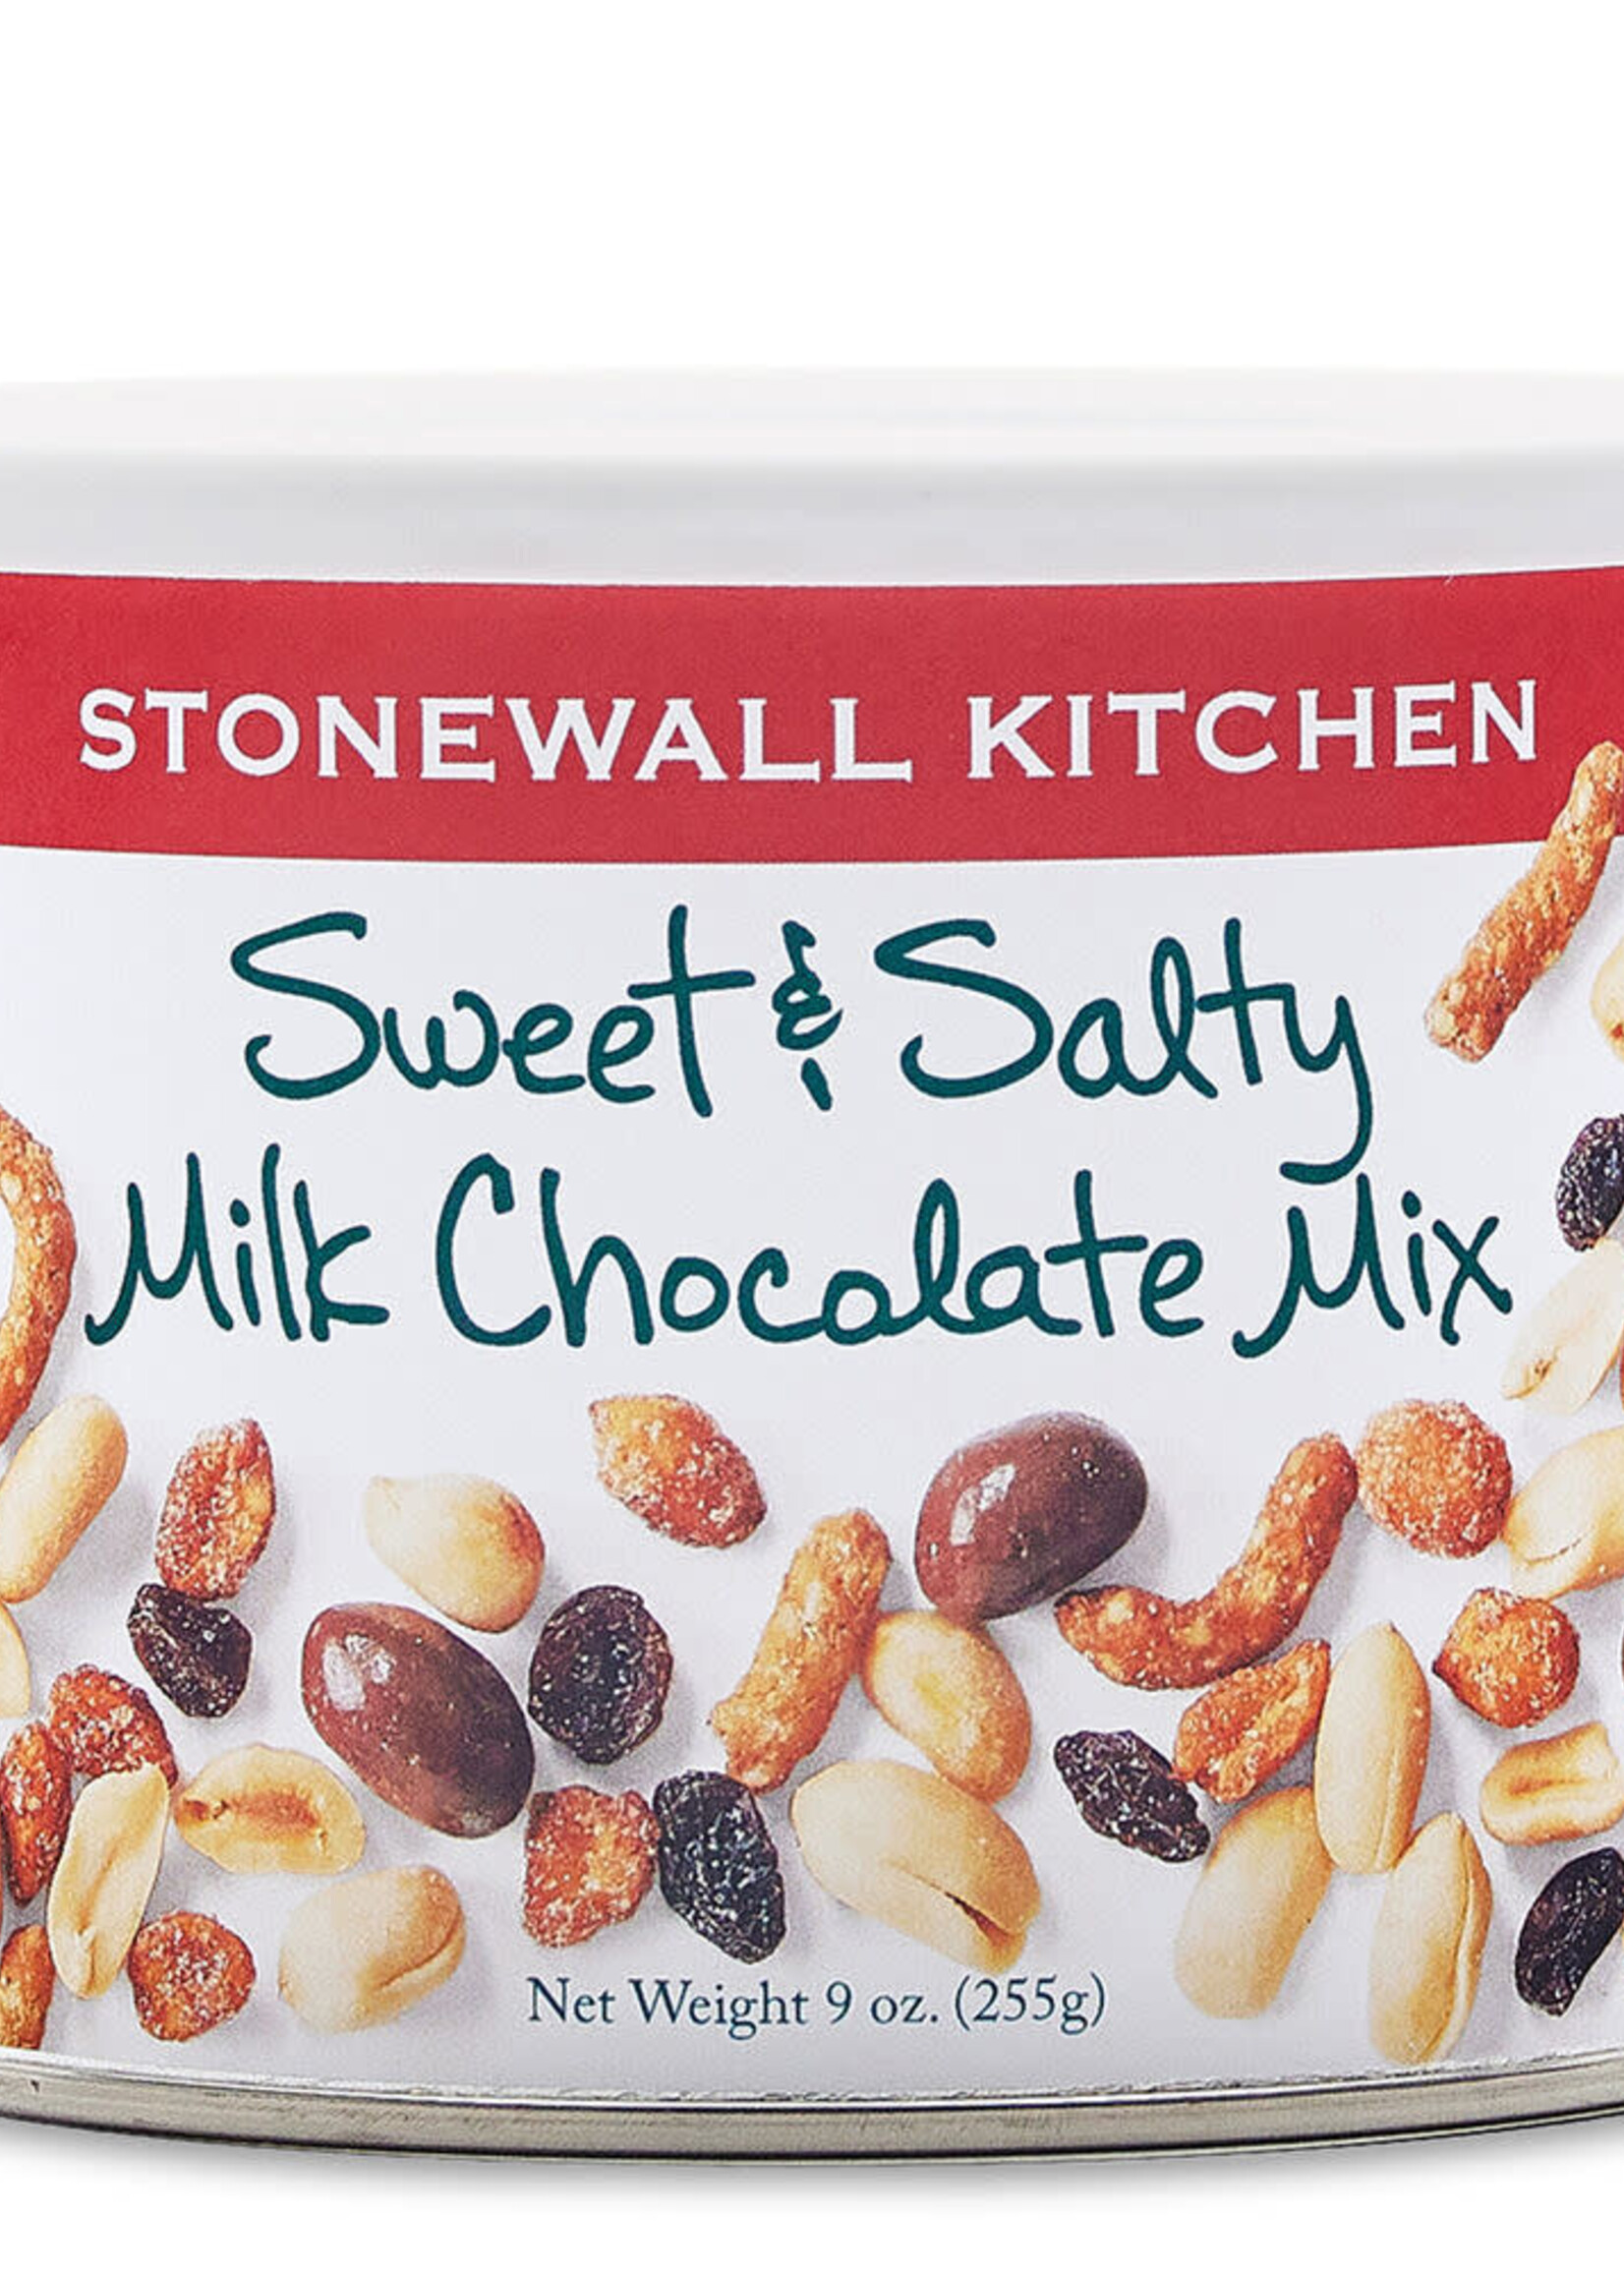 Stonewall Kitchen Stonewall Kitchen - Sweet and Salty Milk Chocolate Mix 9 oz. - 553955